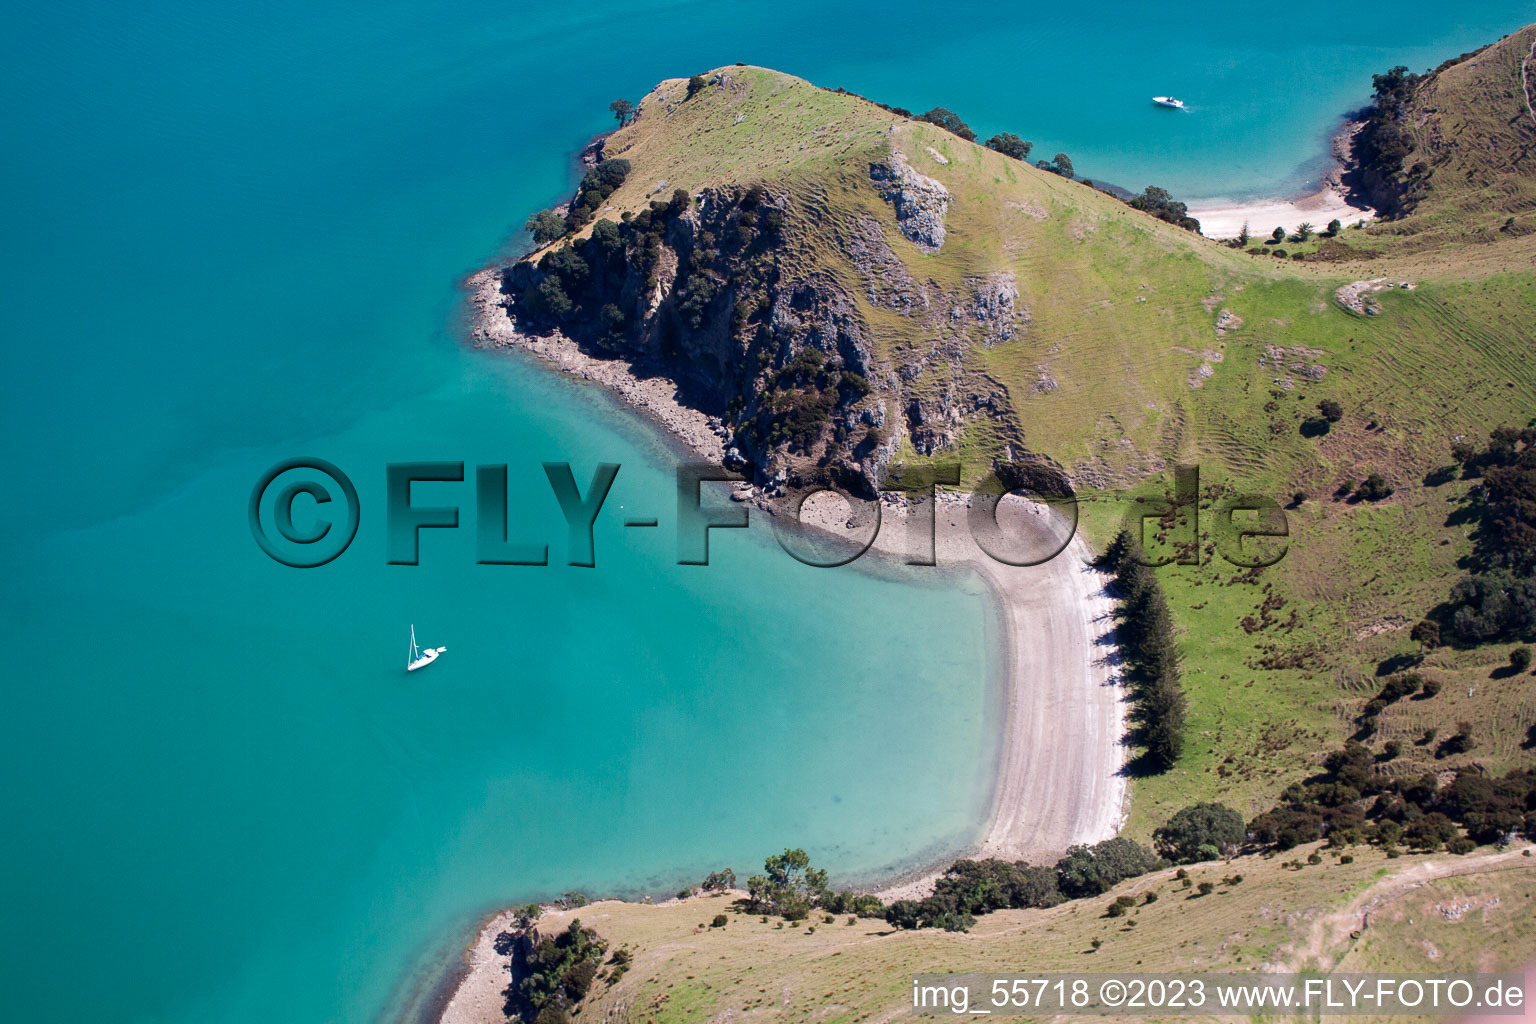 Luftaufnahme von Coromandel im Bundesland Waikato, Neuseeland